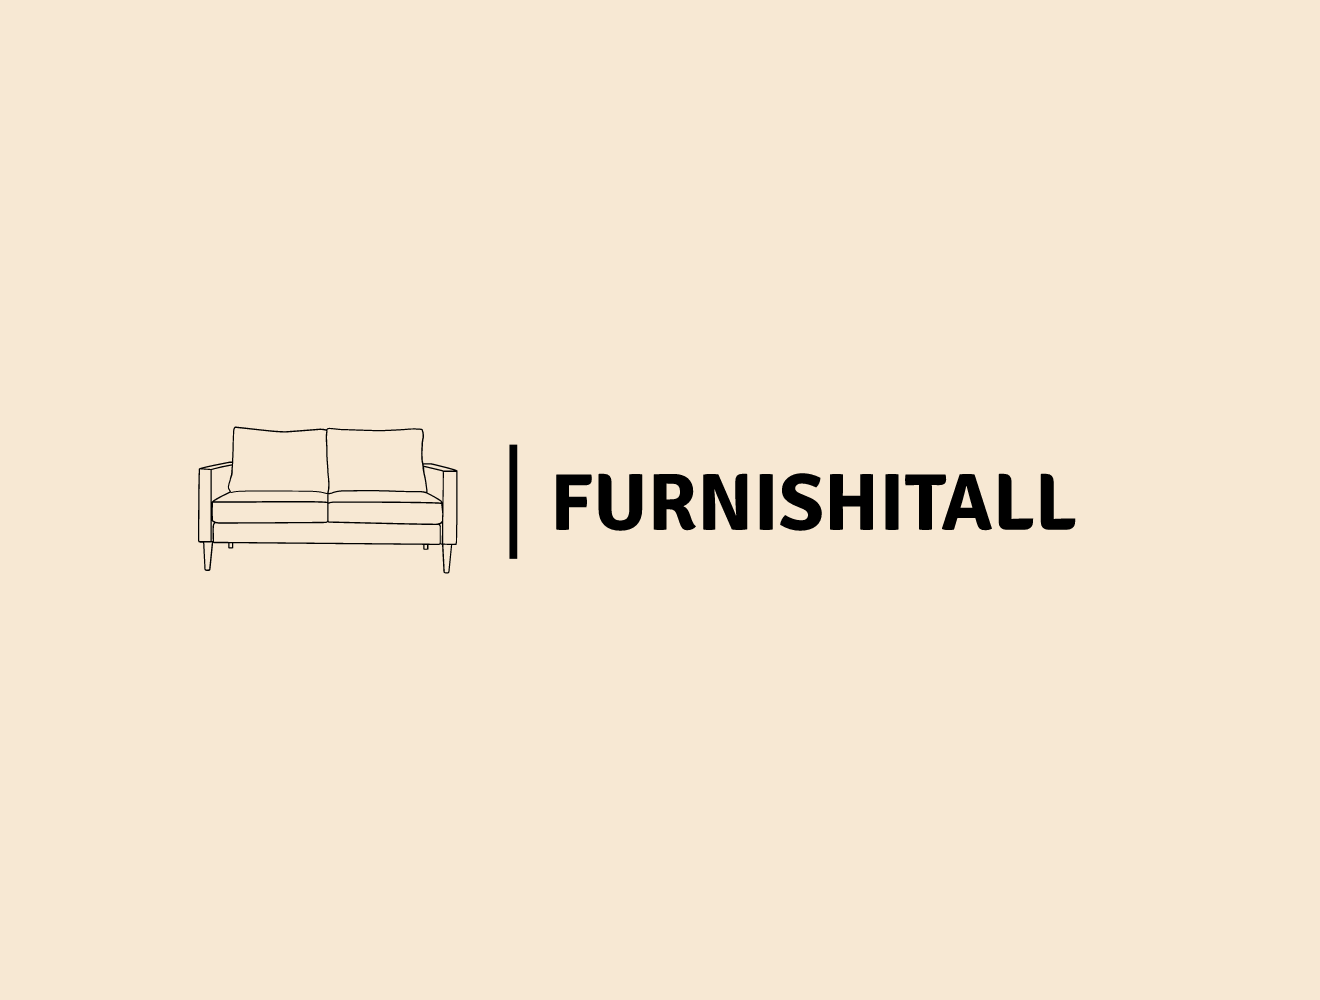 Furnishitall